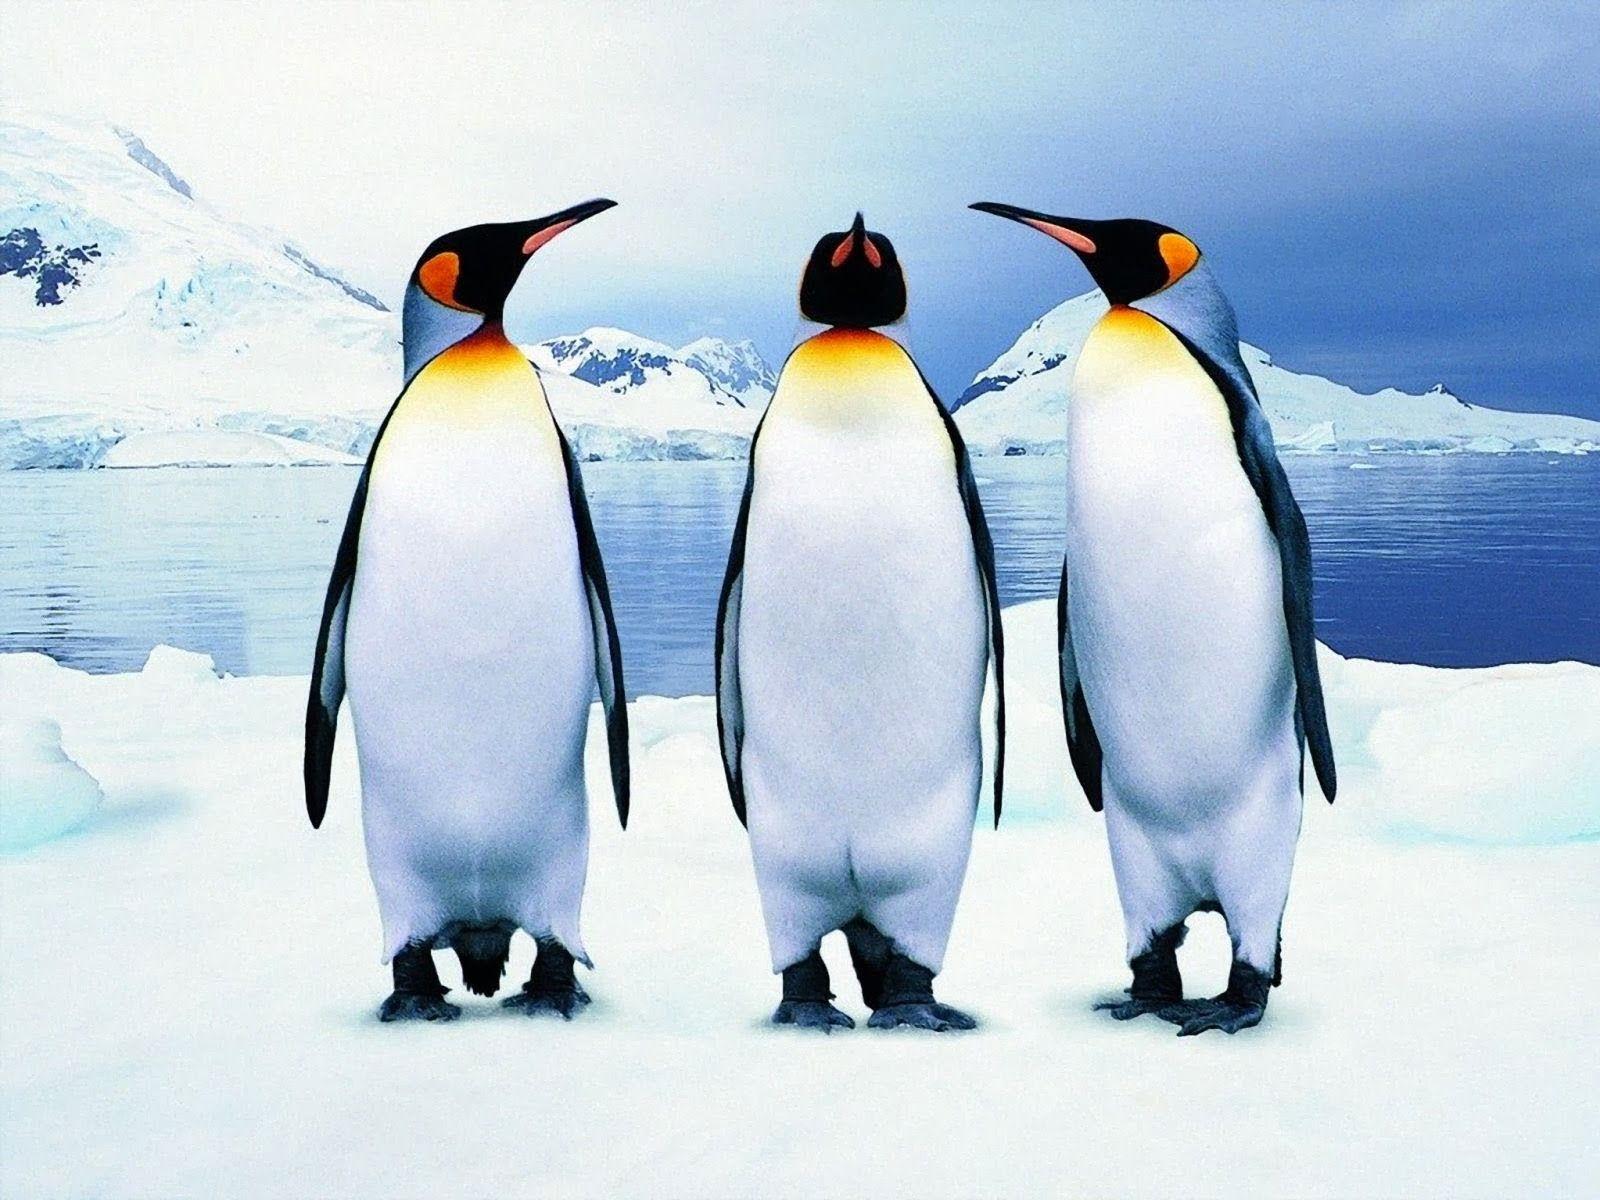 Baby Penguins wallpaper wallpaper free download 2560×1440 Image